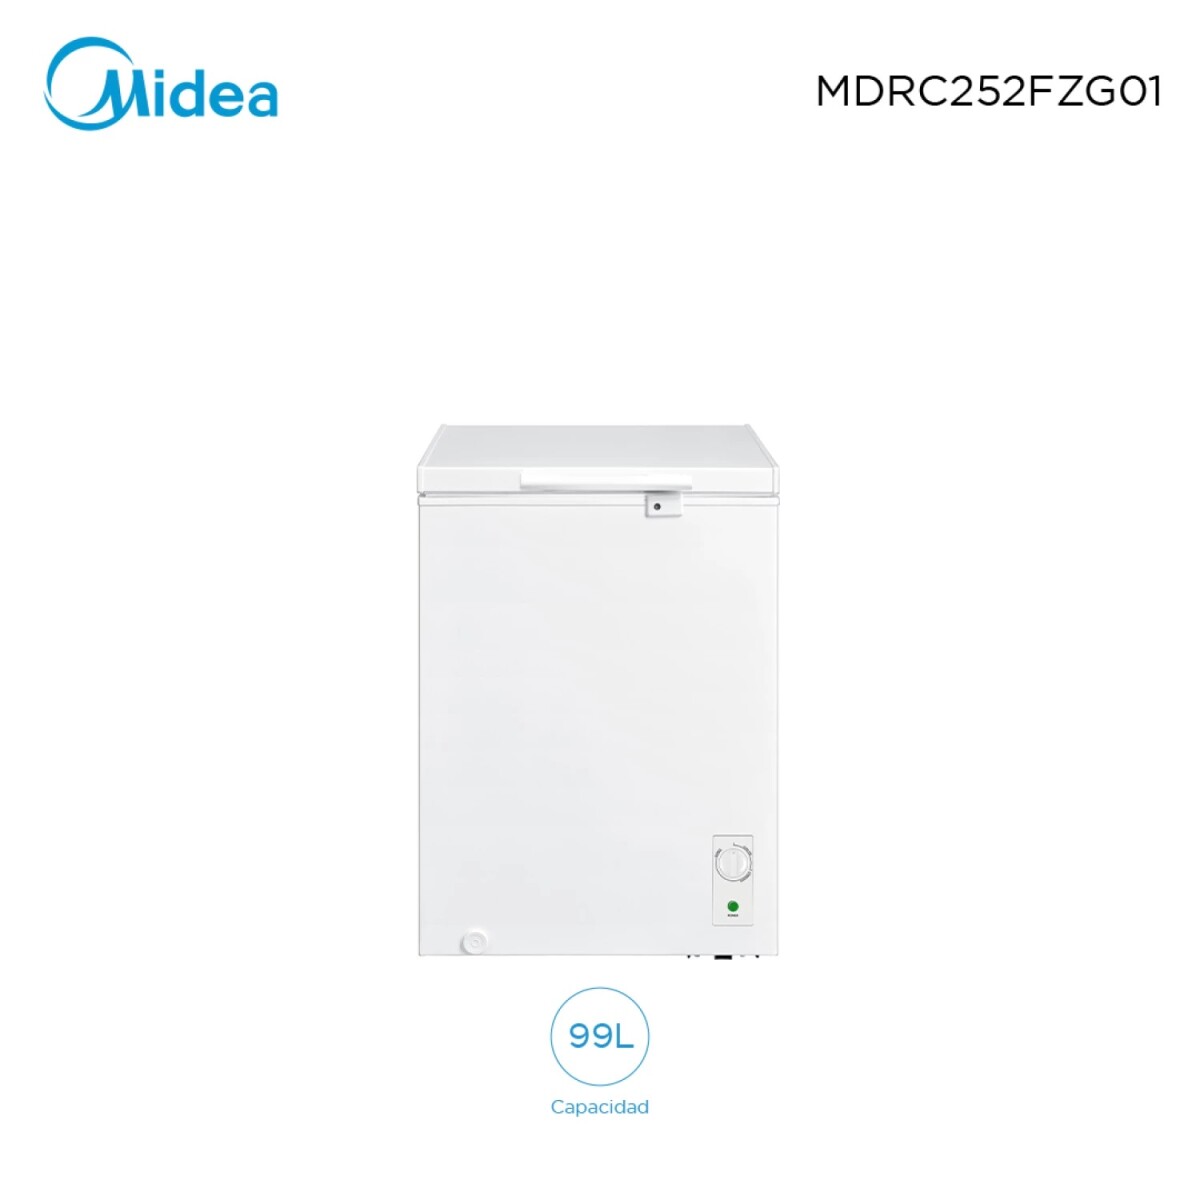 Freezer 99l Midea Mdrc252fzg01 Color Blanco 